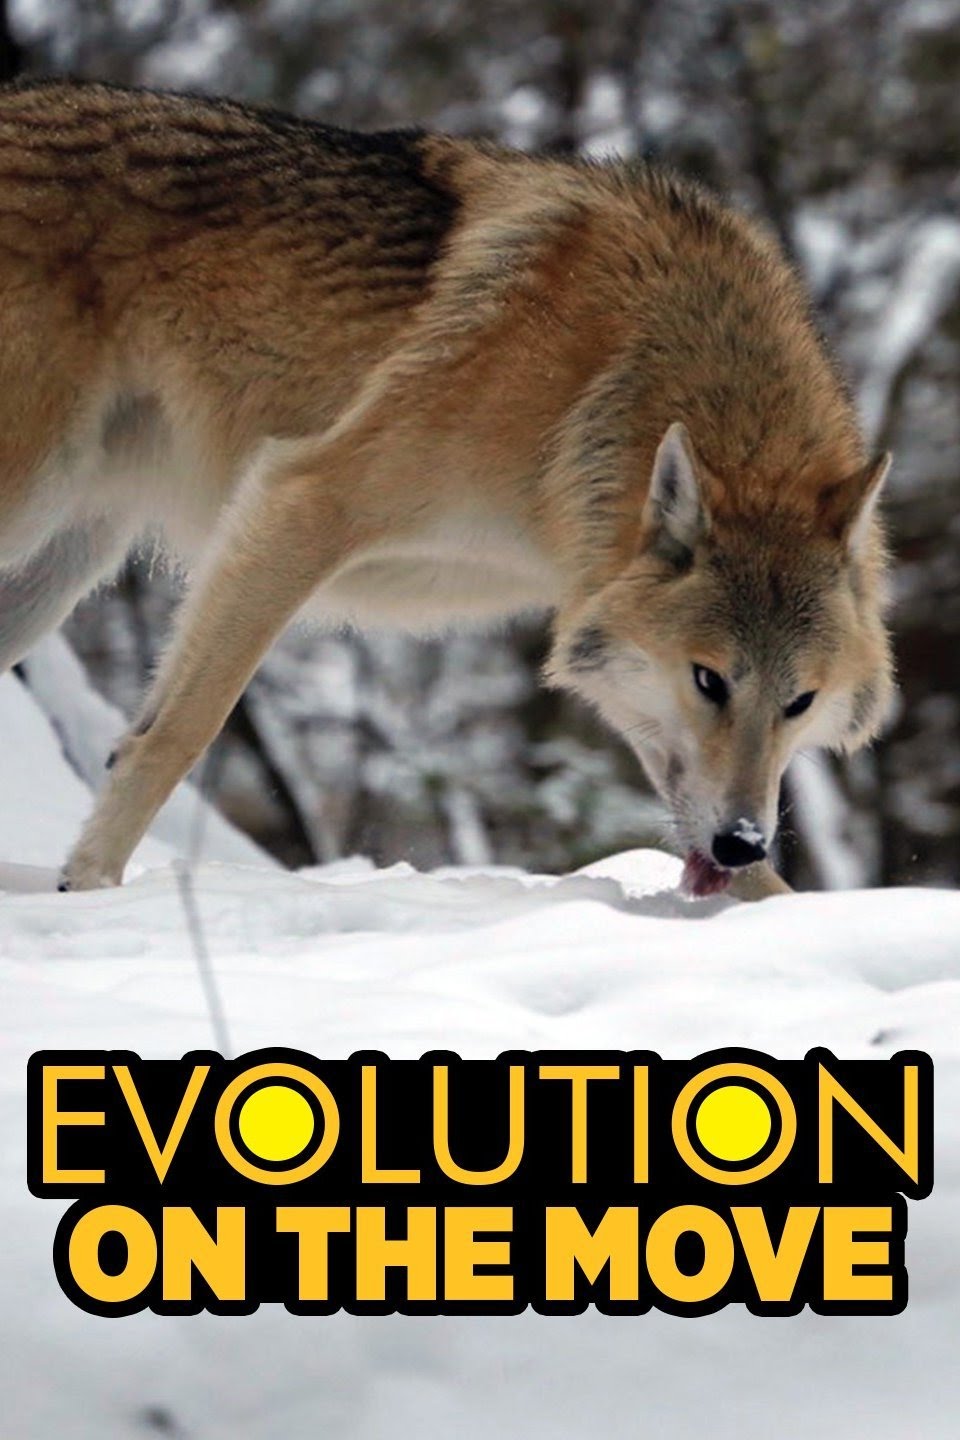 Caratula de Evolution on the move (Evolución en movimiento) 